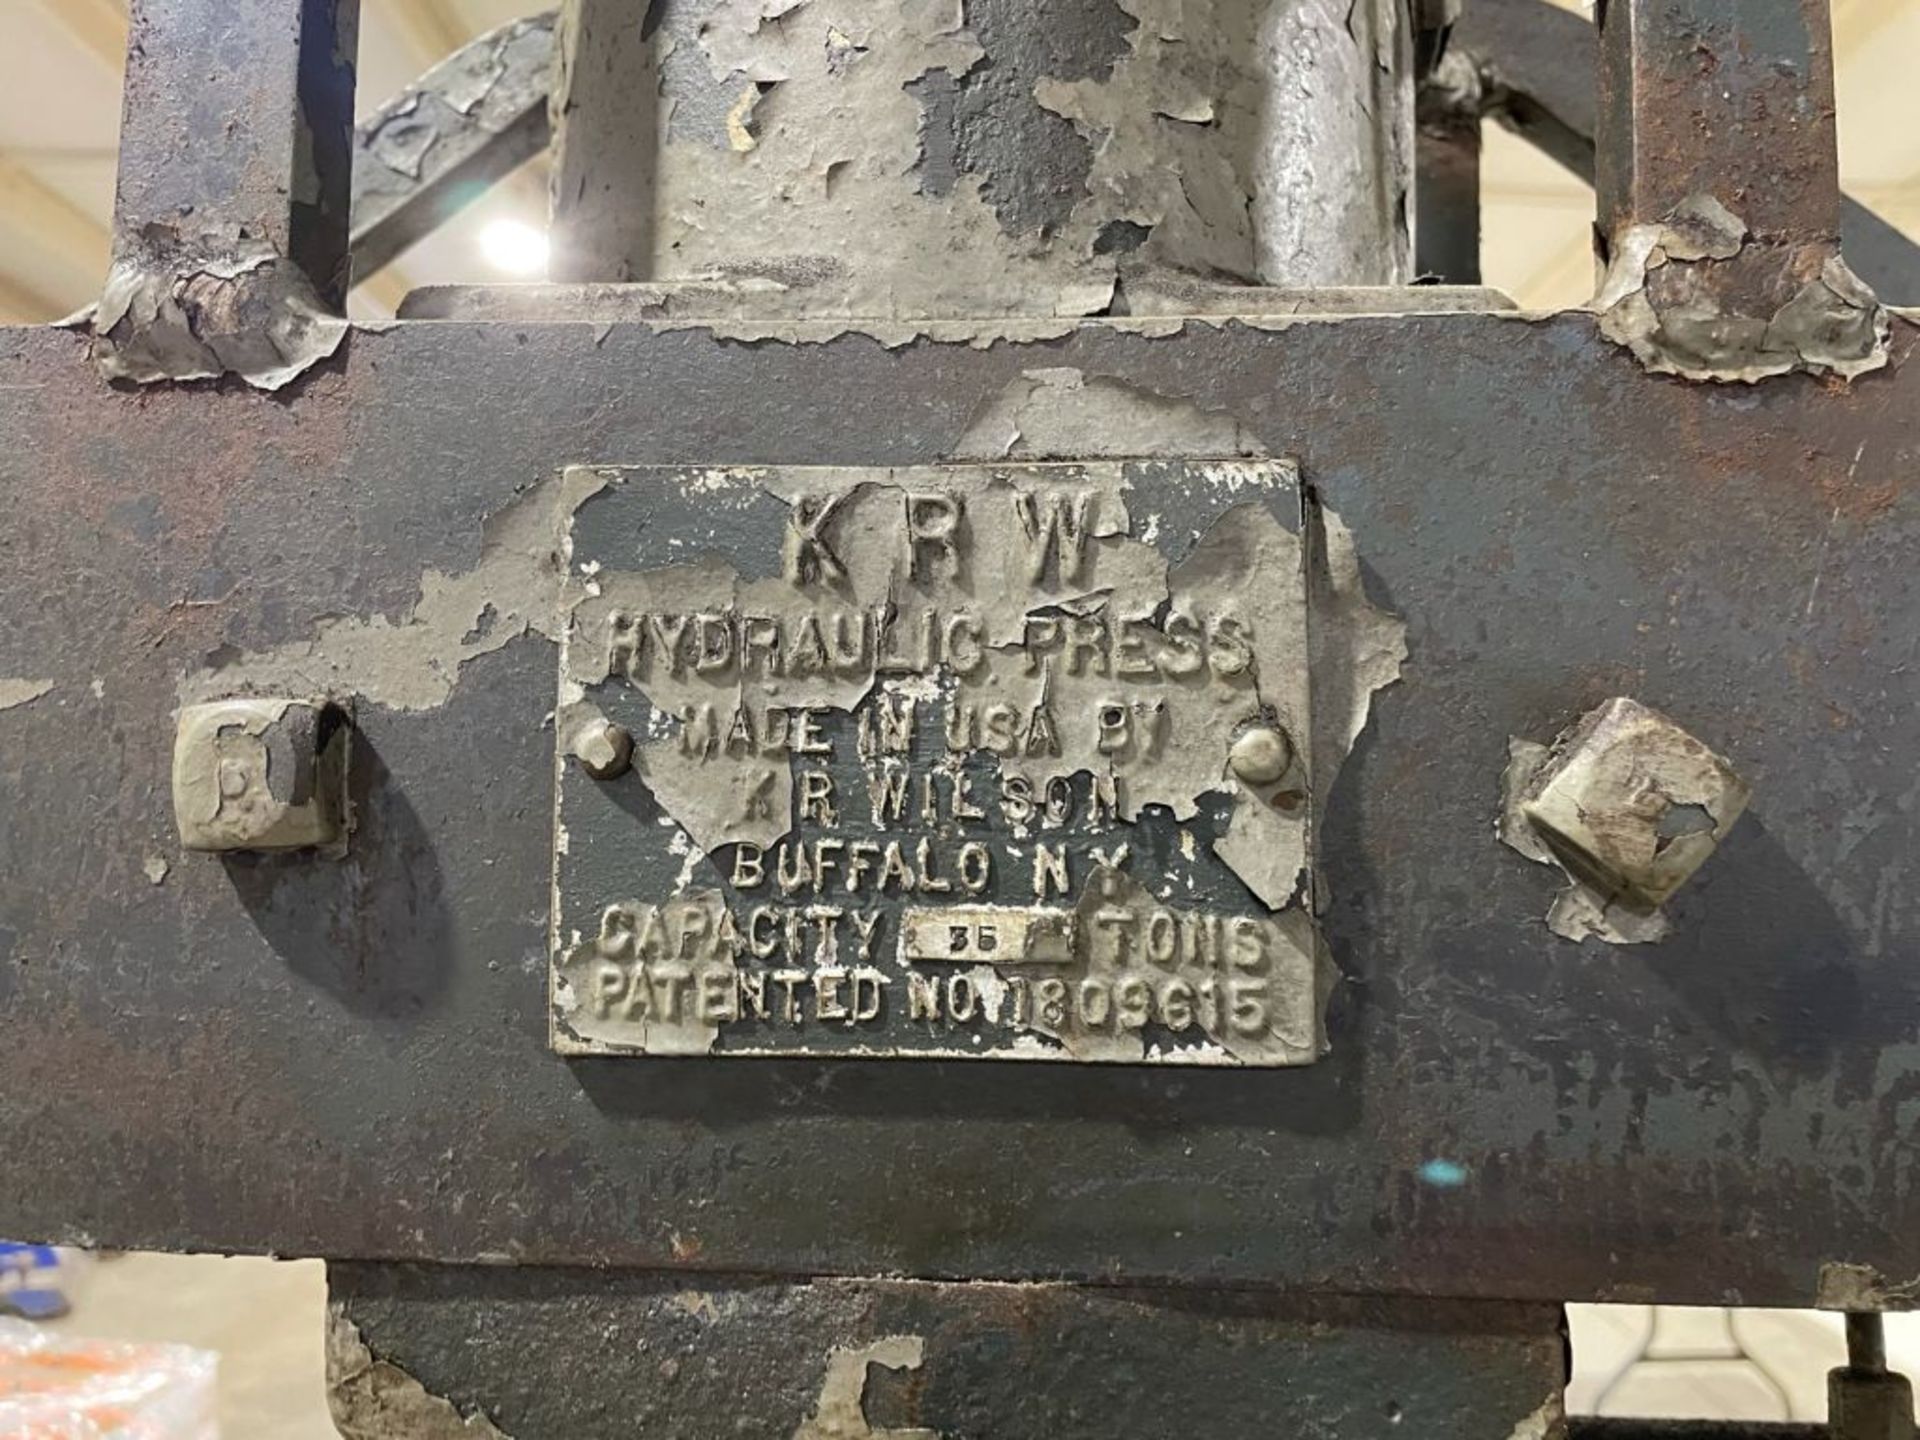 KRW H-frame press, 36 T., hydraulic. - Image 3 of 4